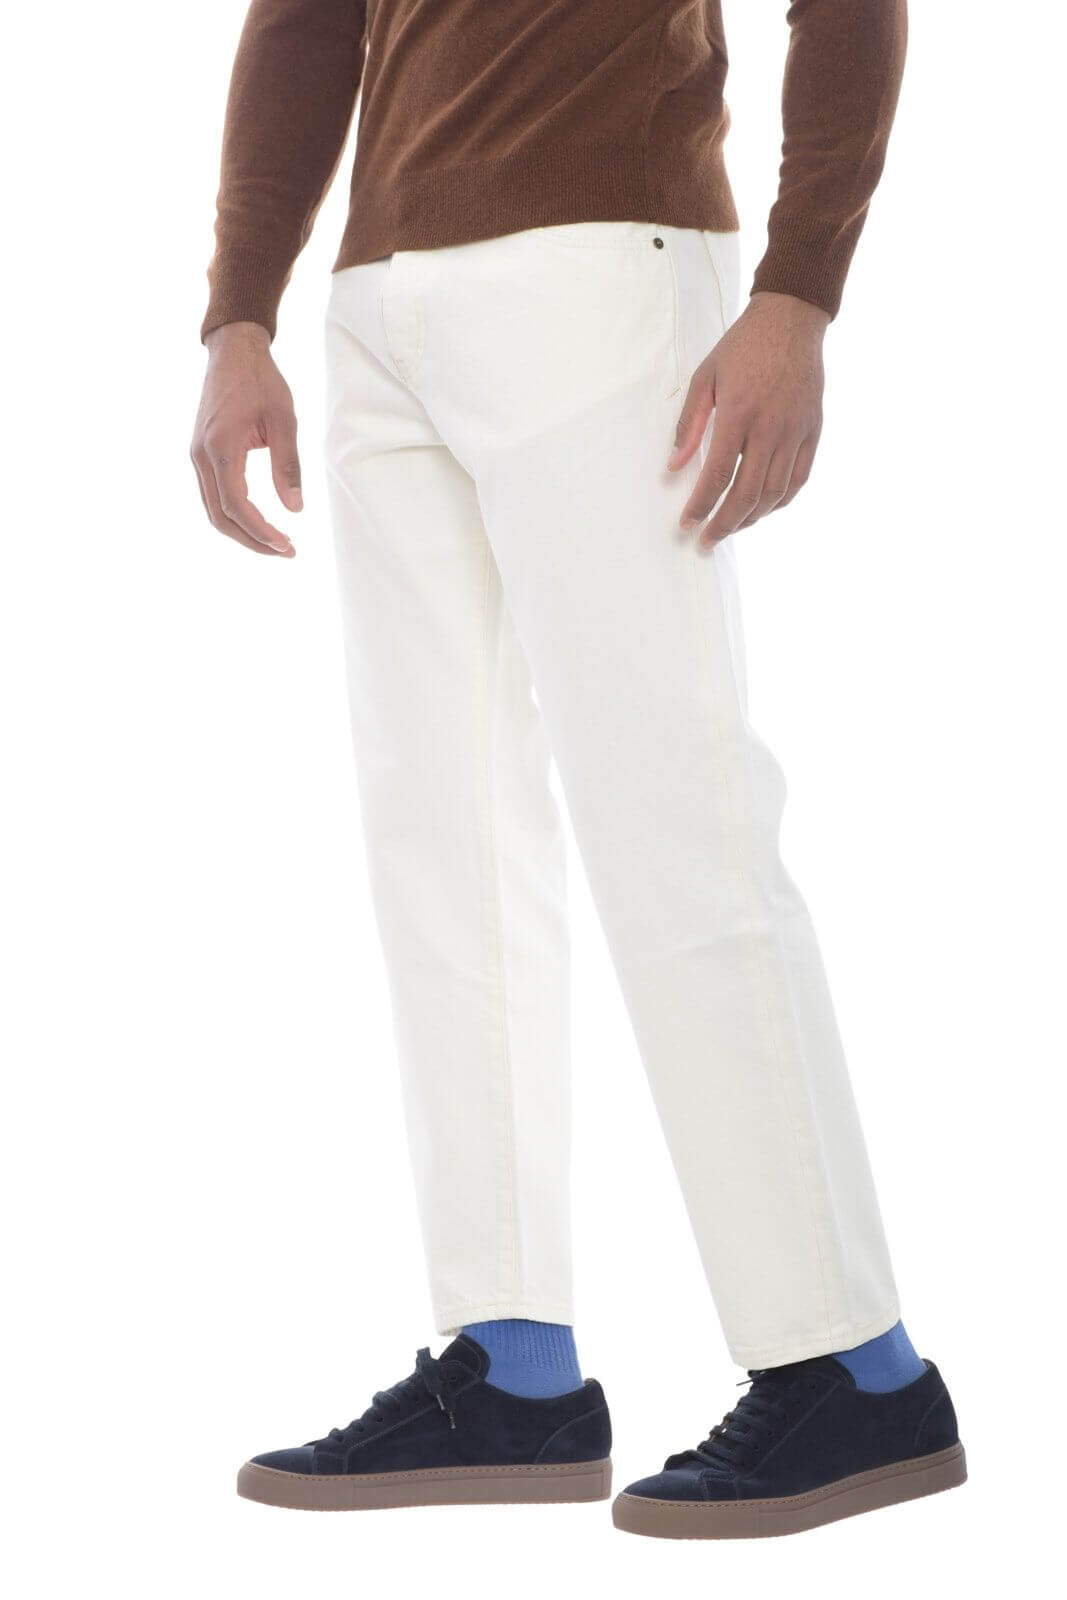 Michael Coal Pantaloni Uomo modello jeans